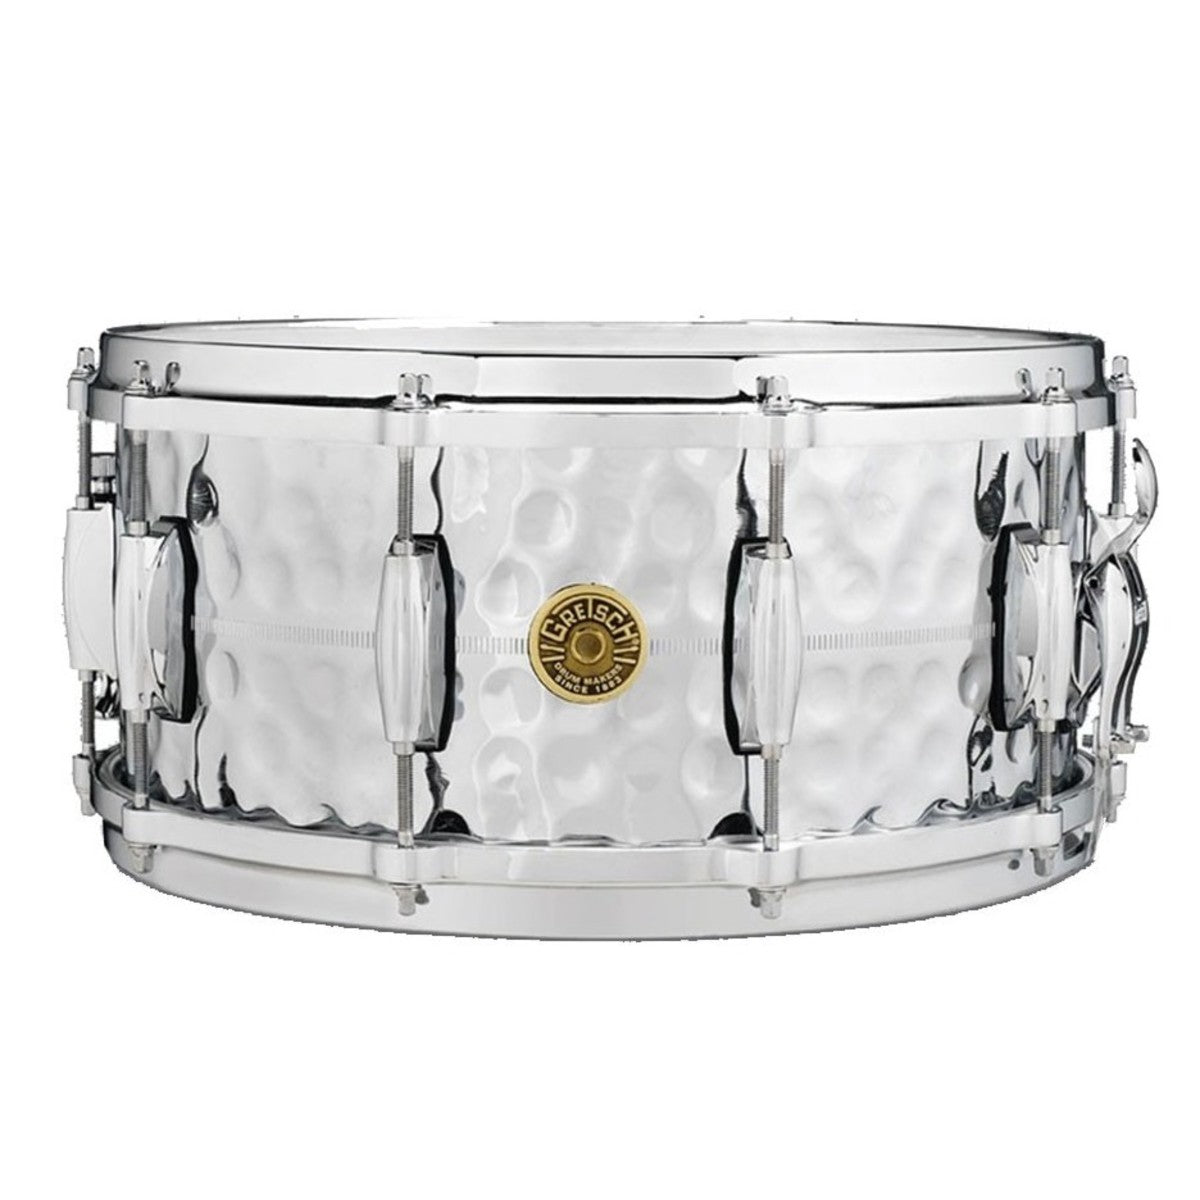 Gretsch USA Hammered Chrome Over Brass 14"x5" Snare Drum